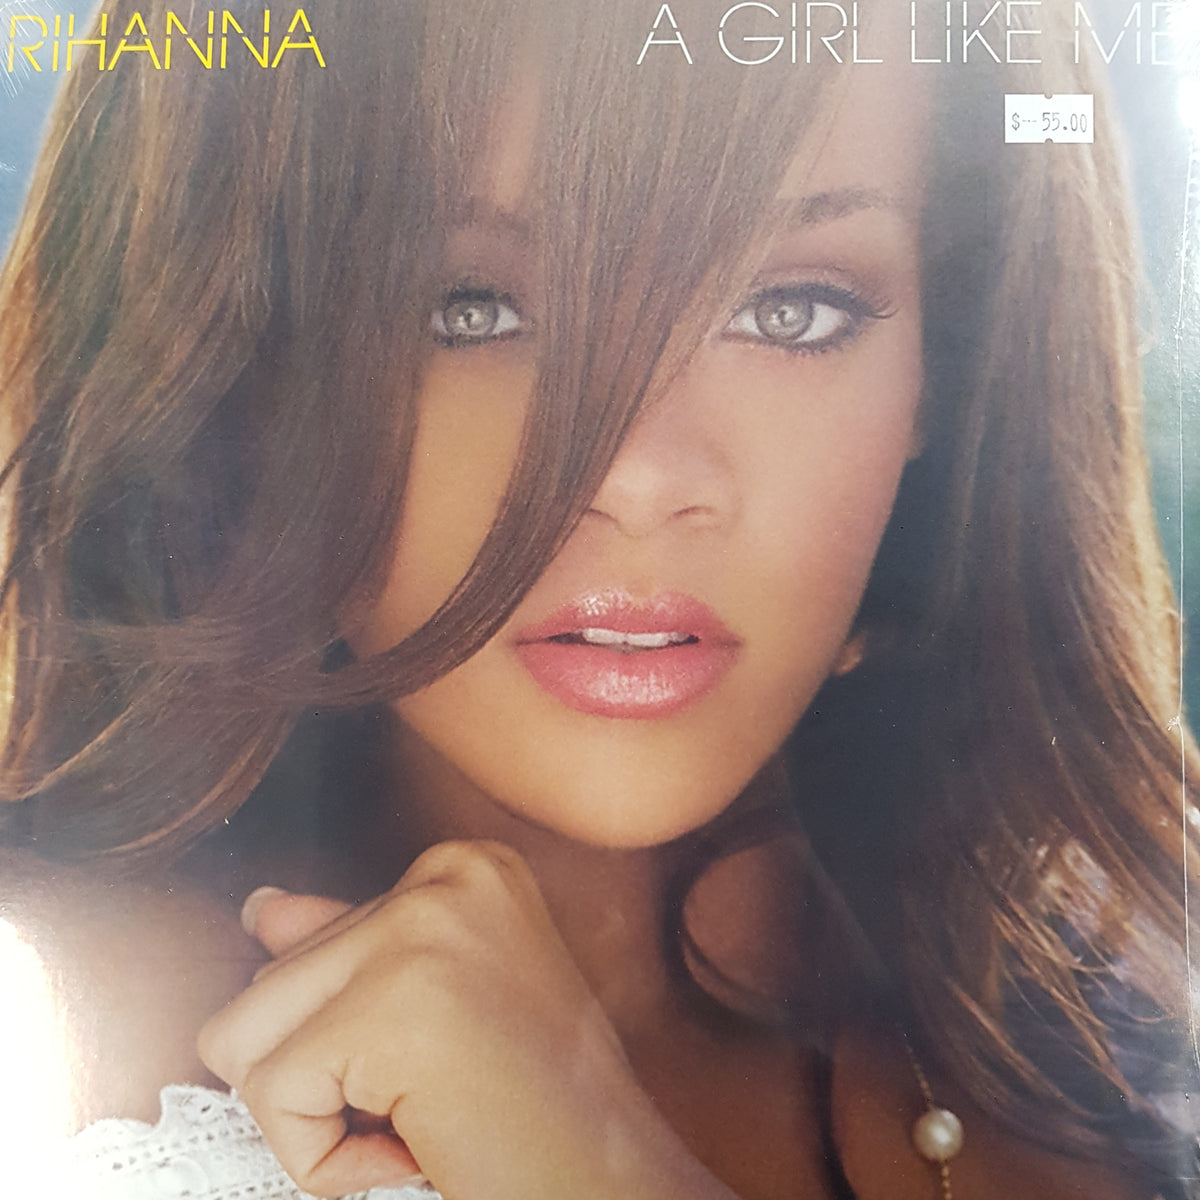 Rihanna Good Girl Gone Bad 2LP